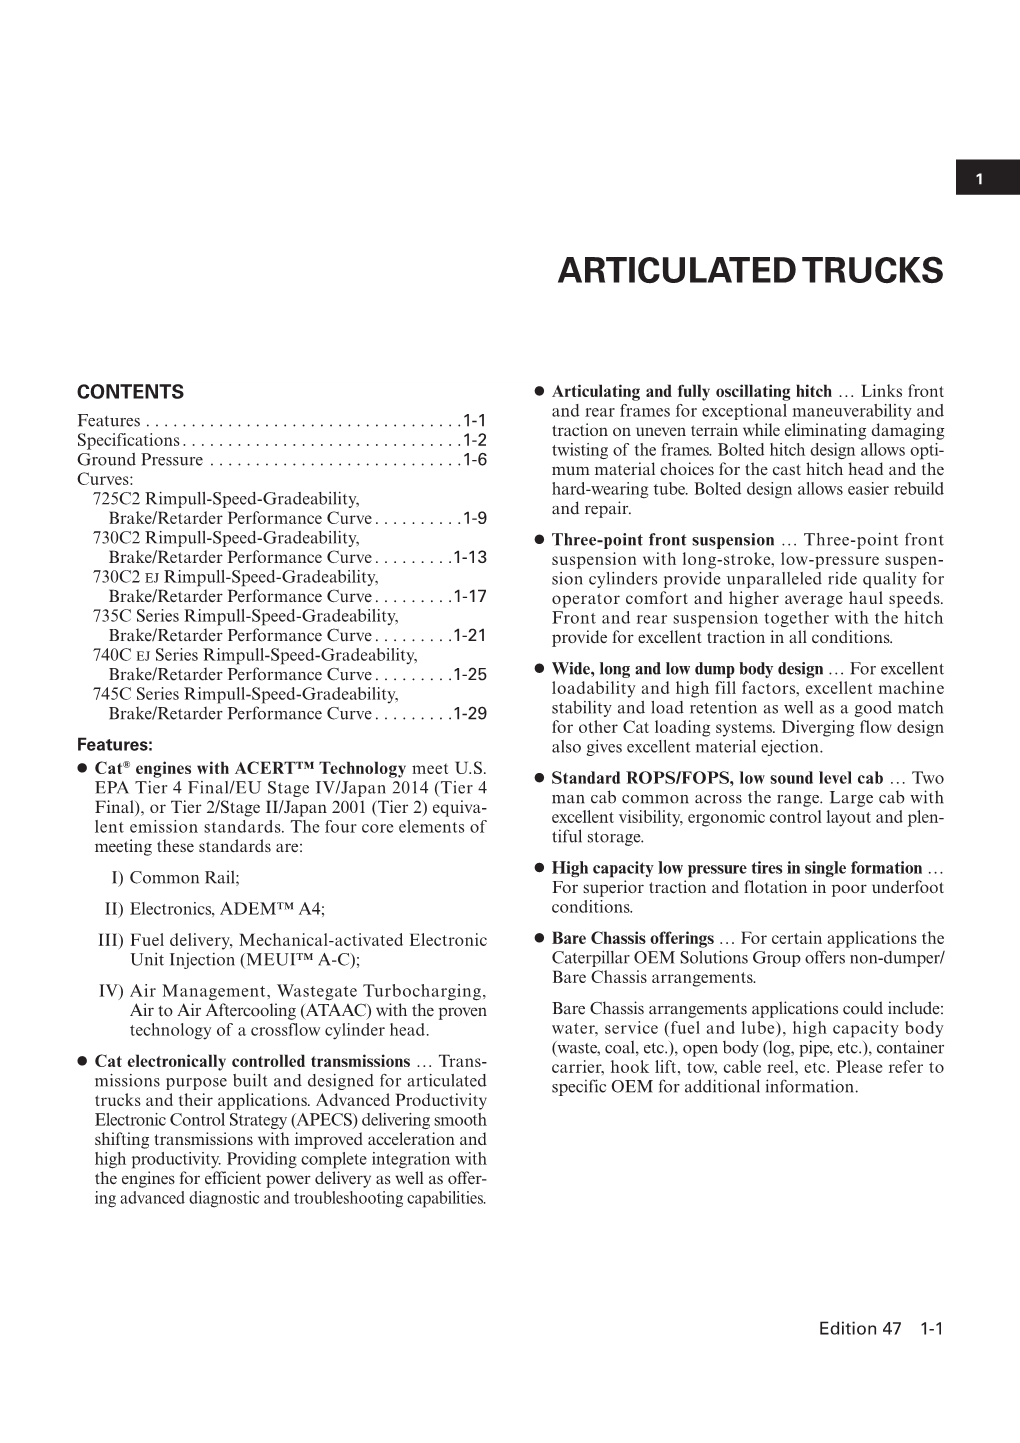 Articulated Trucks